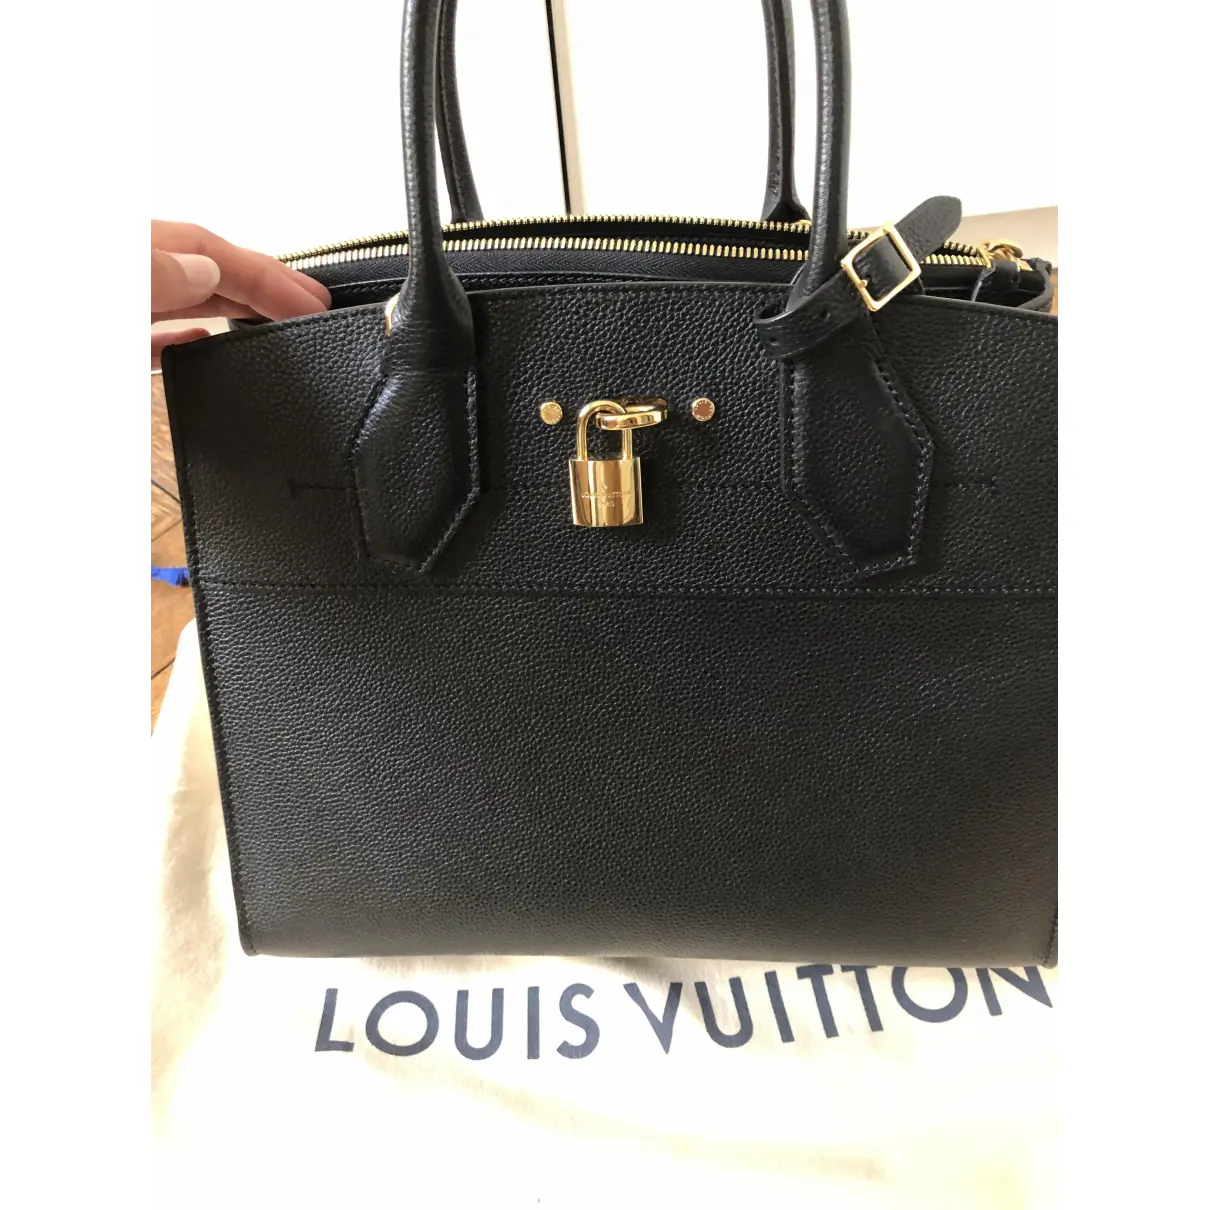 Buy Louis Vuitton City Steamer leather handbag online